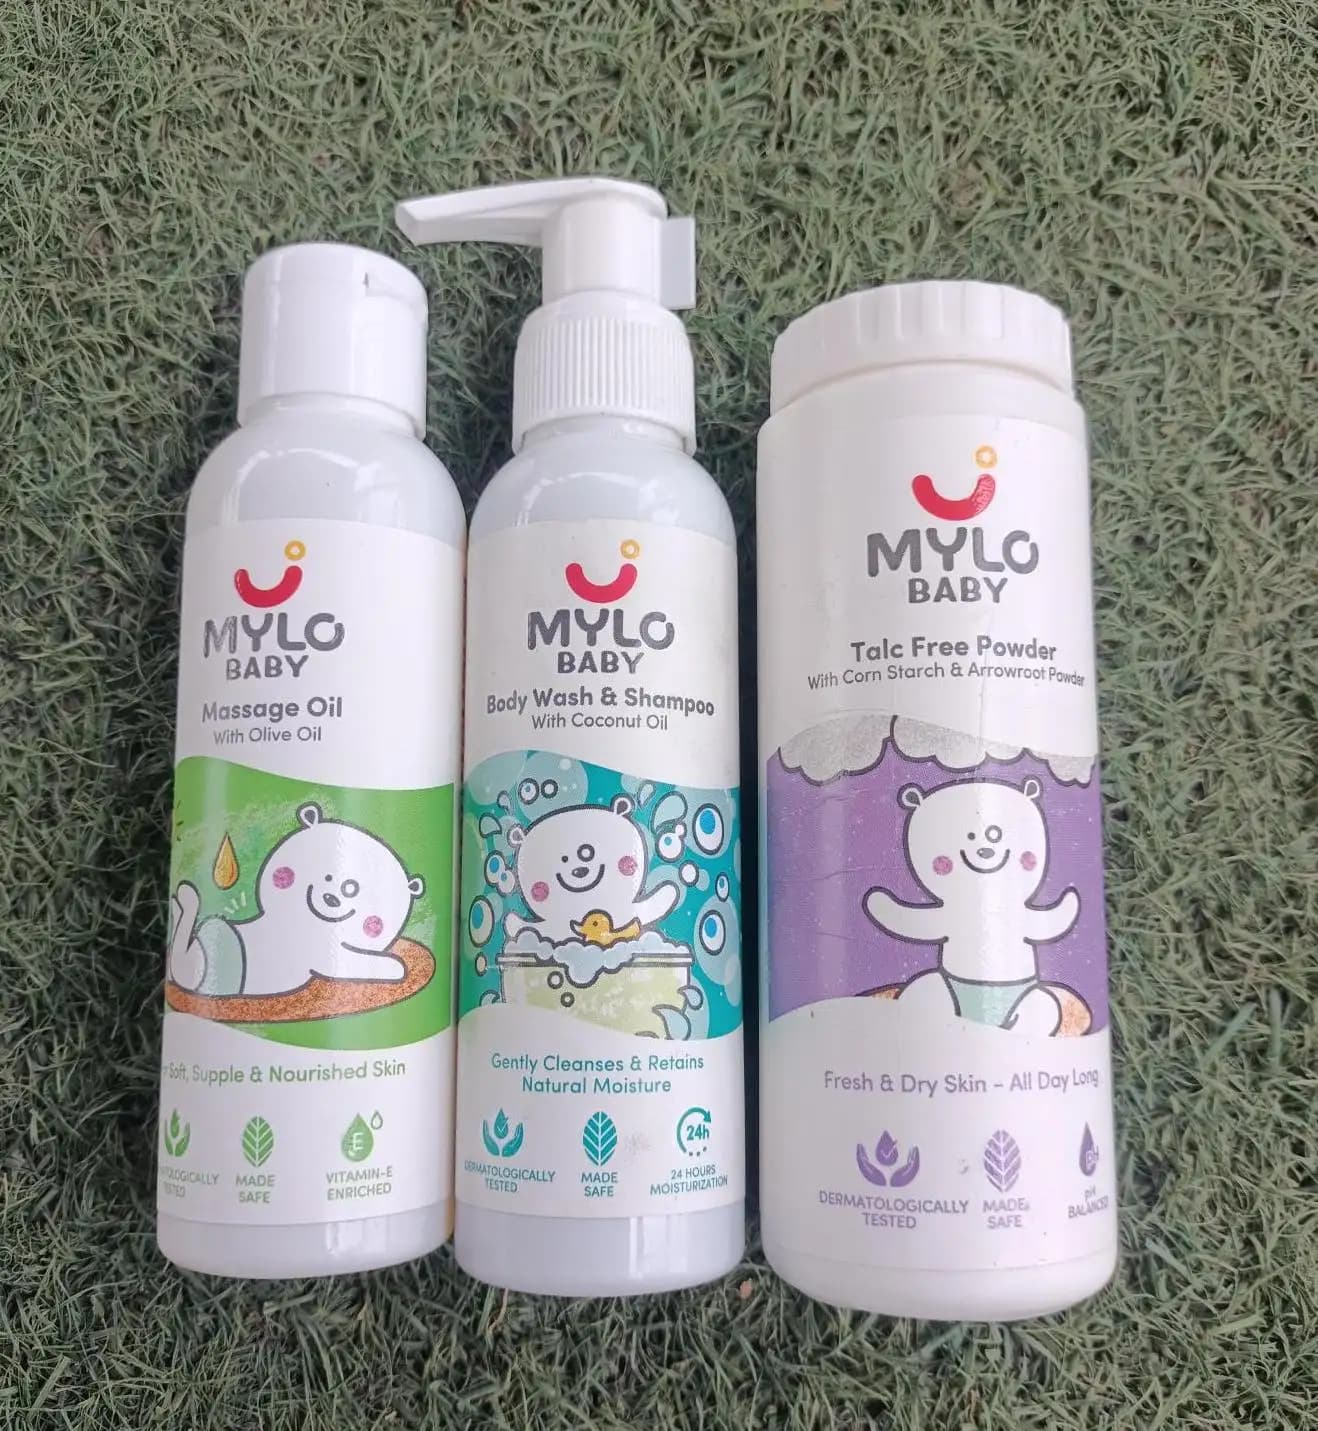 Mylo Baby Bath Regime Kit - Baby Massage Oil, Baby Head to Toe Wash & Baby Talc-Free Powder